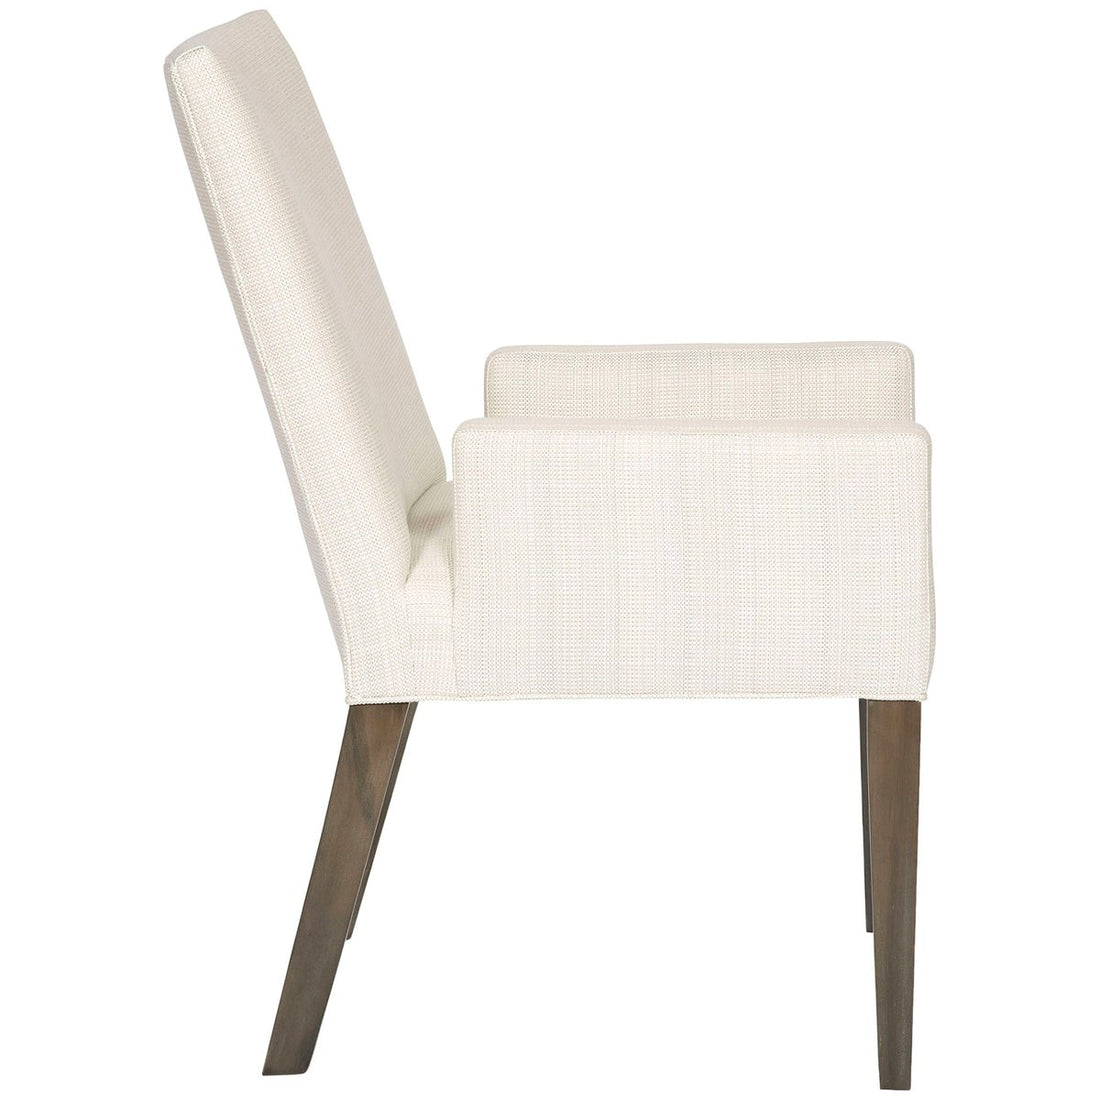 Vanguard Furniture Axis II Arm Chair